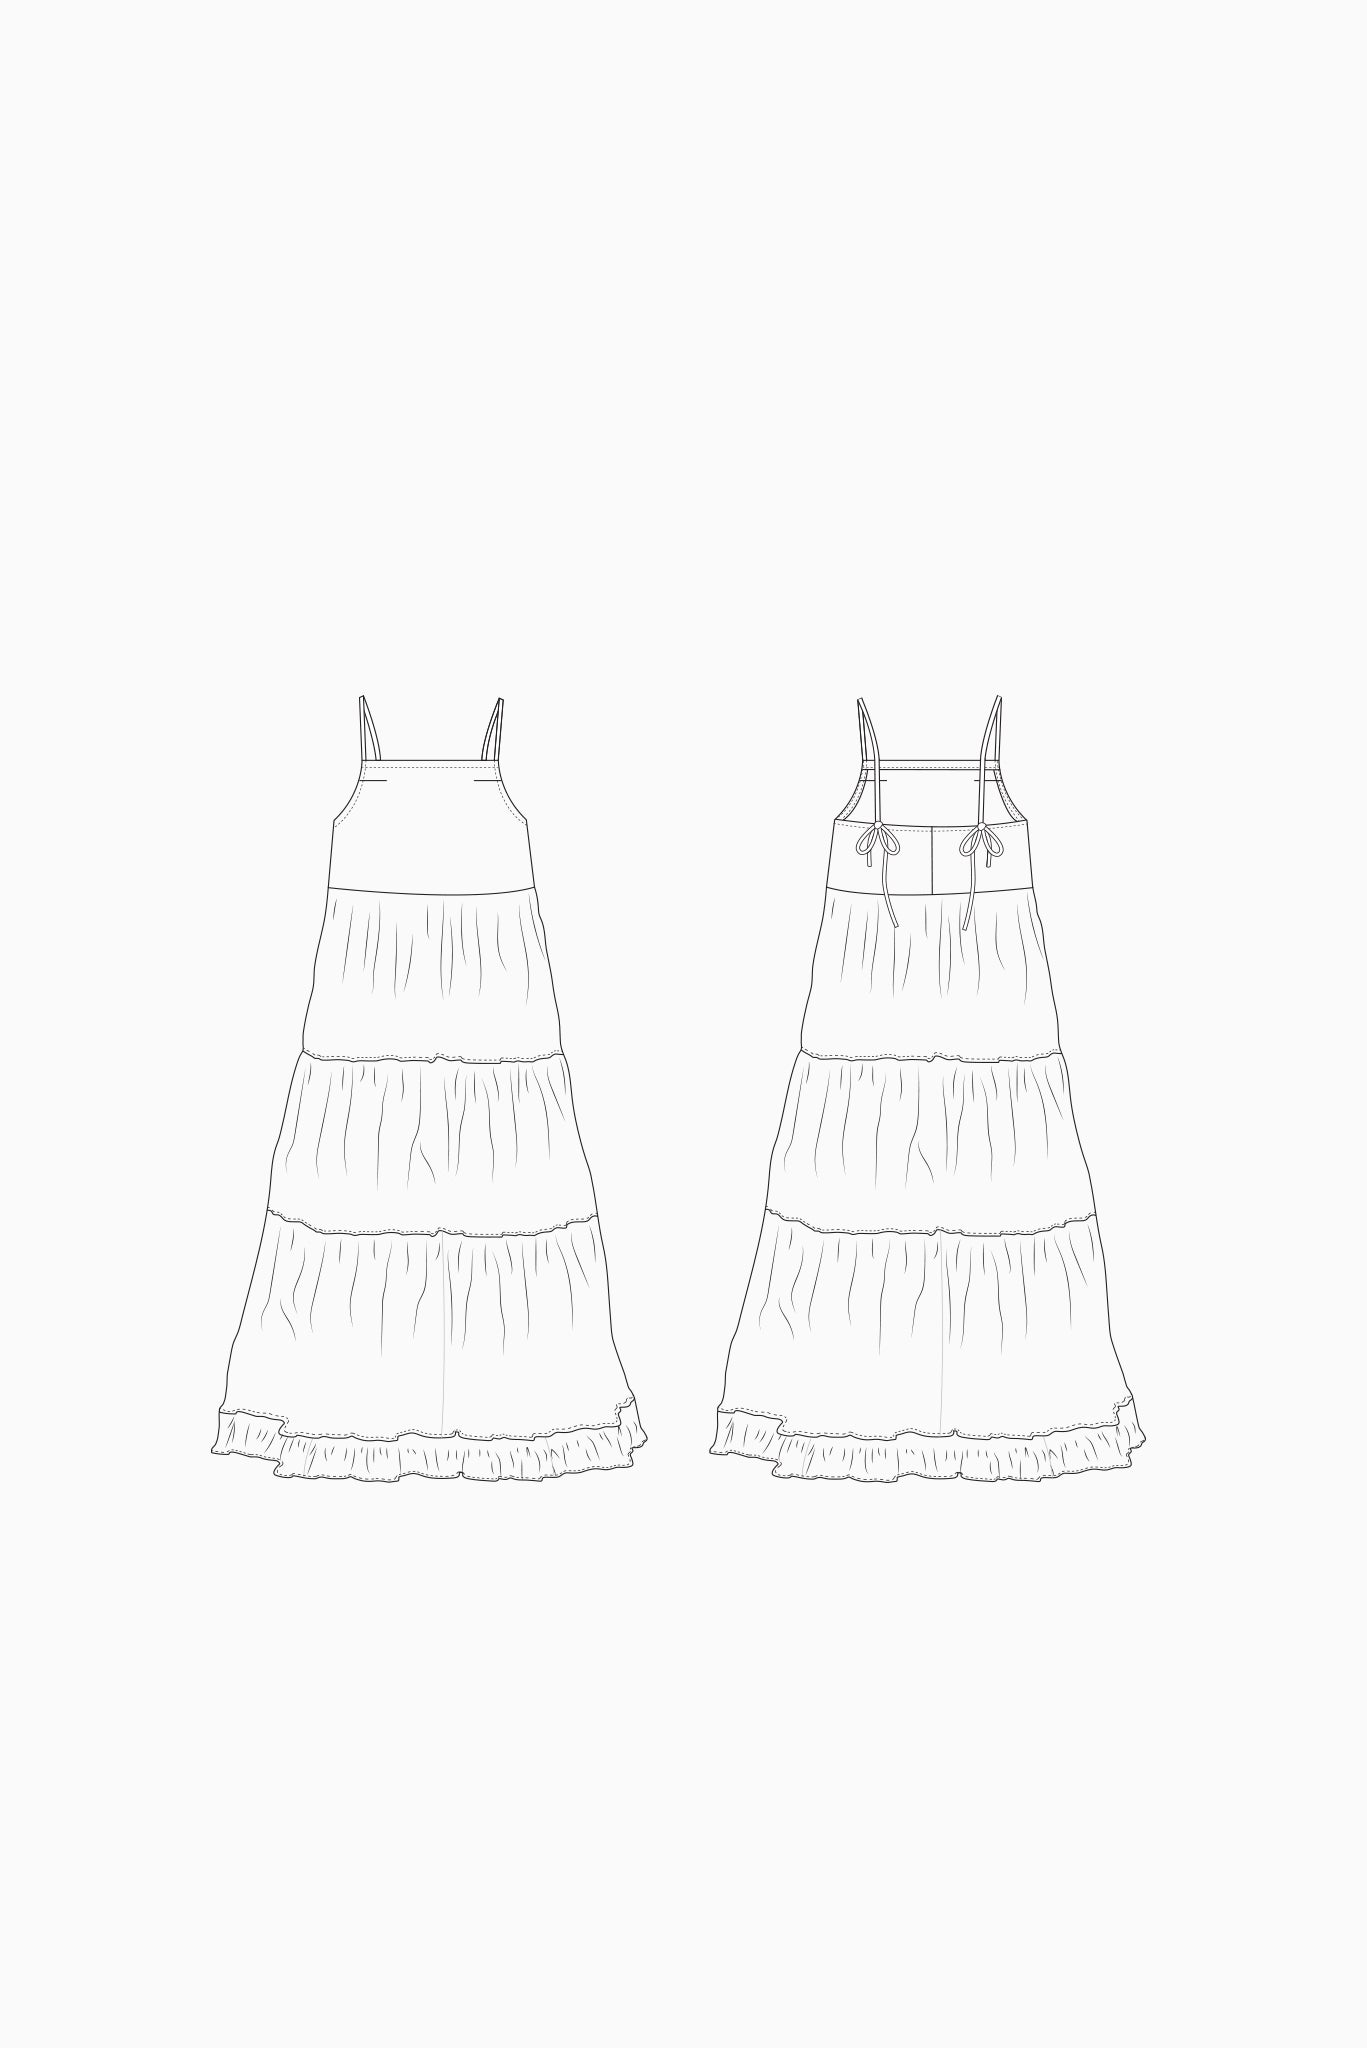 Wattle-Fawn Dress set of DIGITAL Patterns